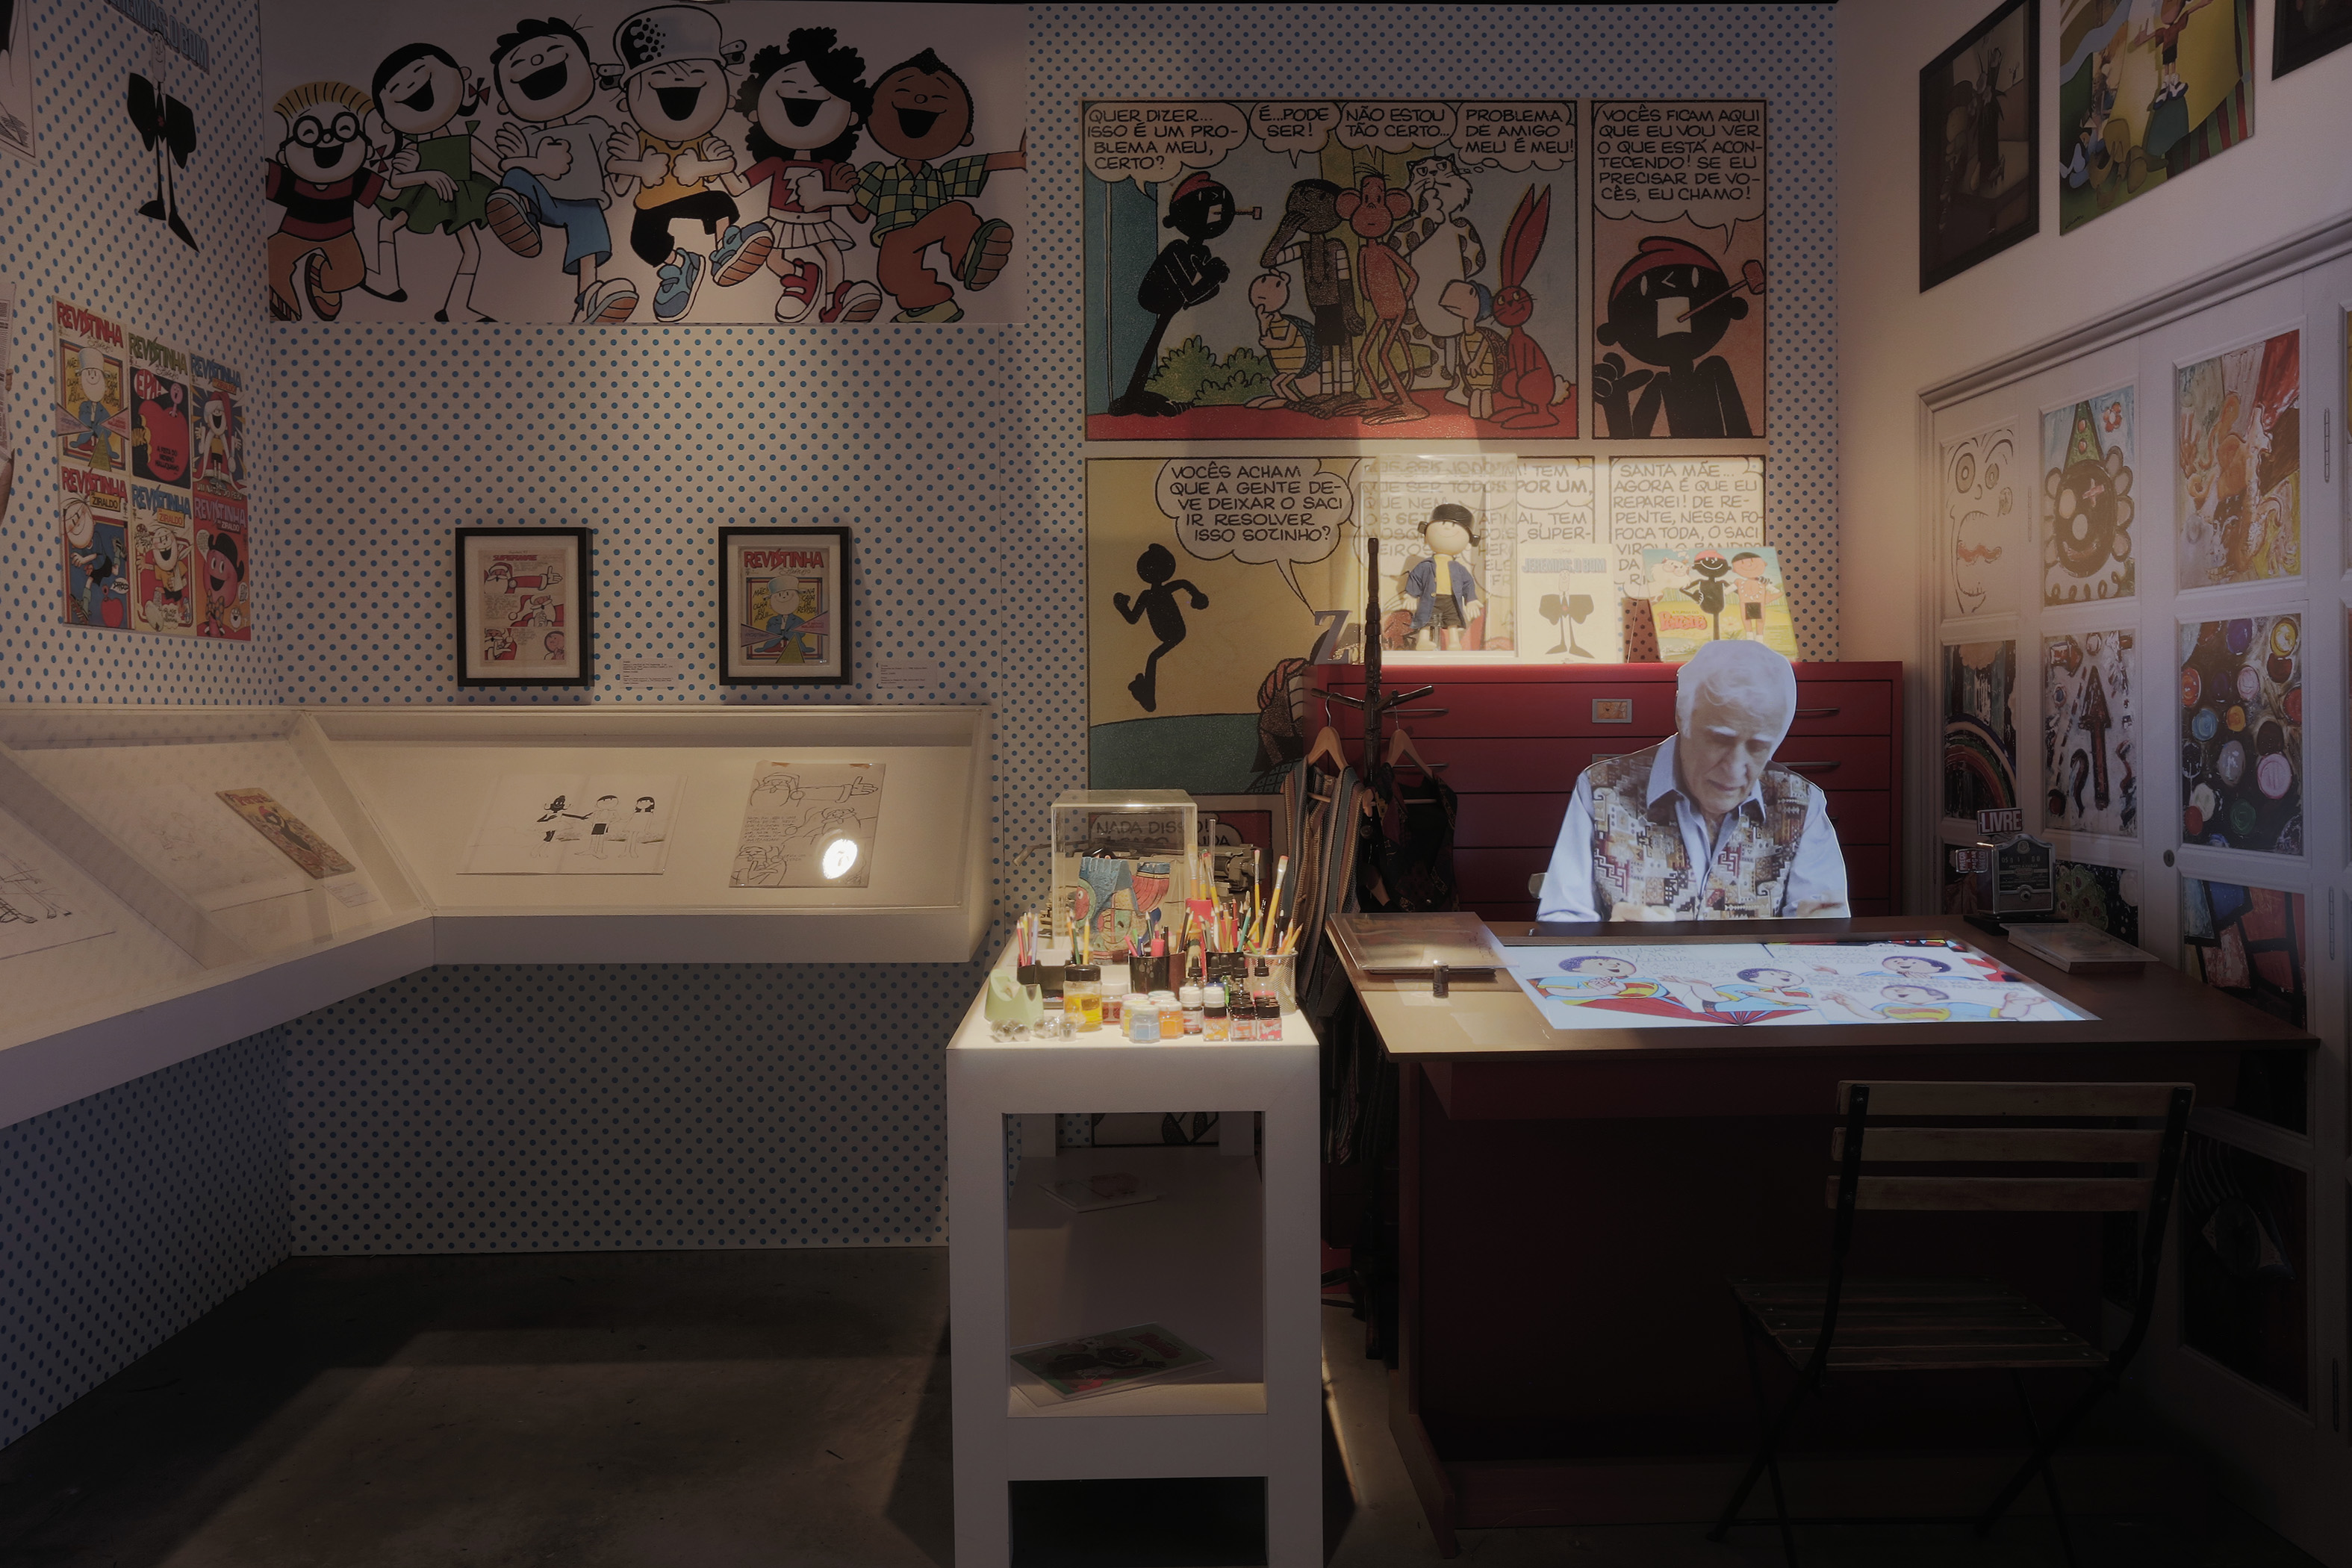 Sketchbook Mitos & Lendas by José Luis, in Chiaroscuro Studios's CCXP  WORLDS Comic Art Gallery Room